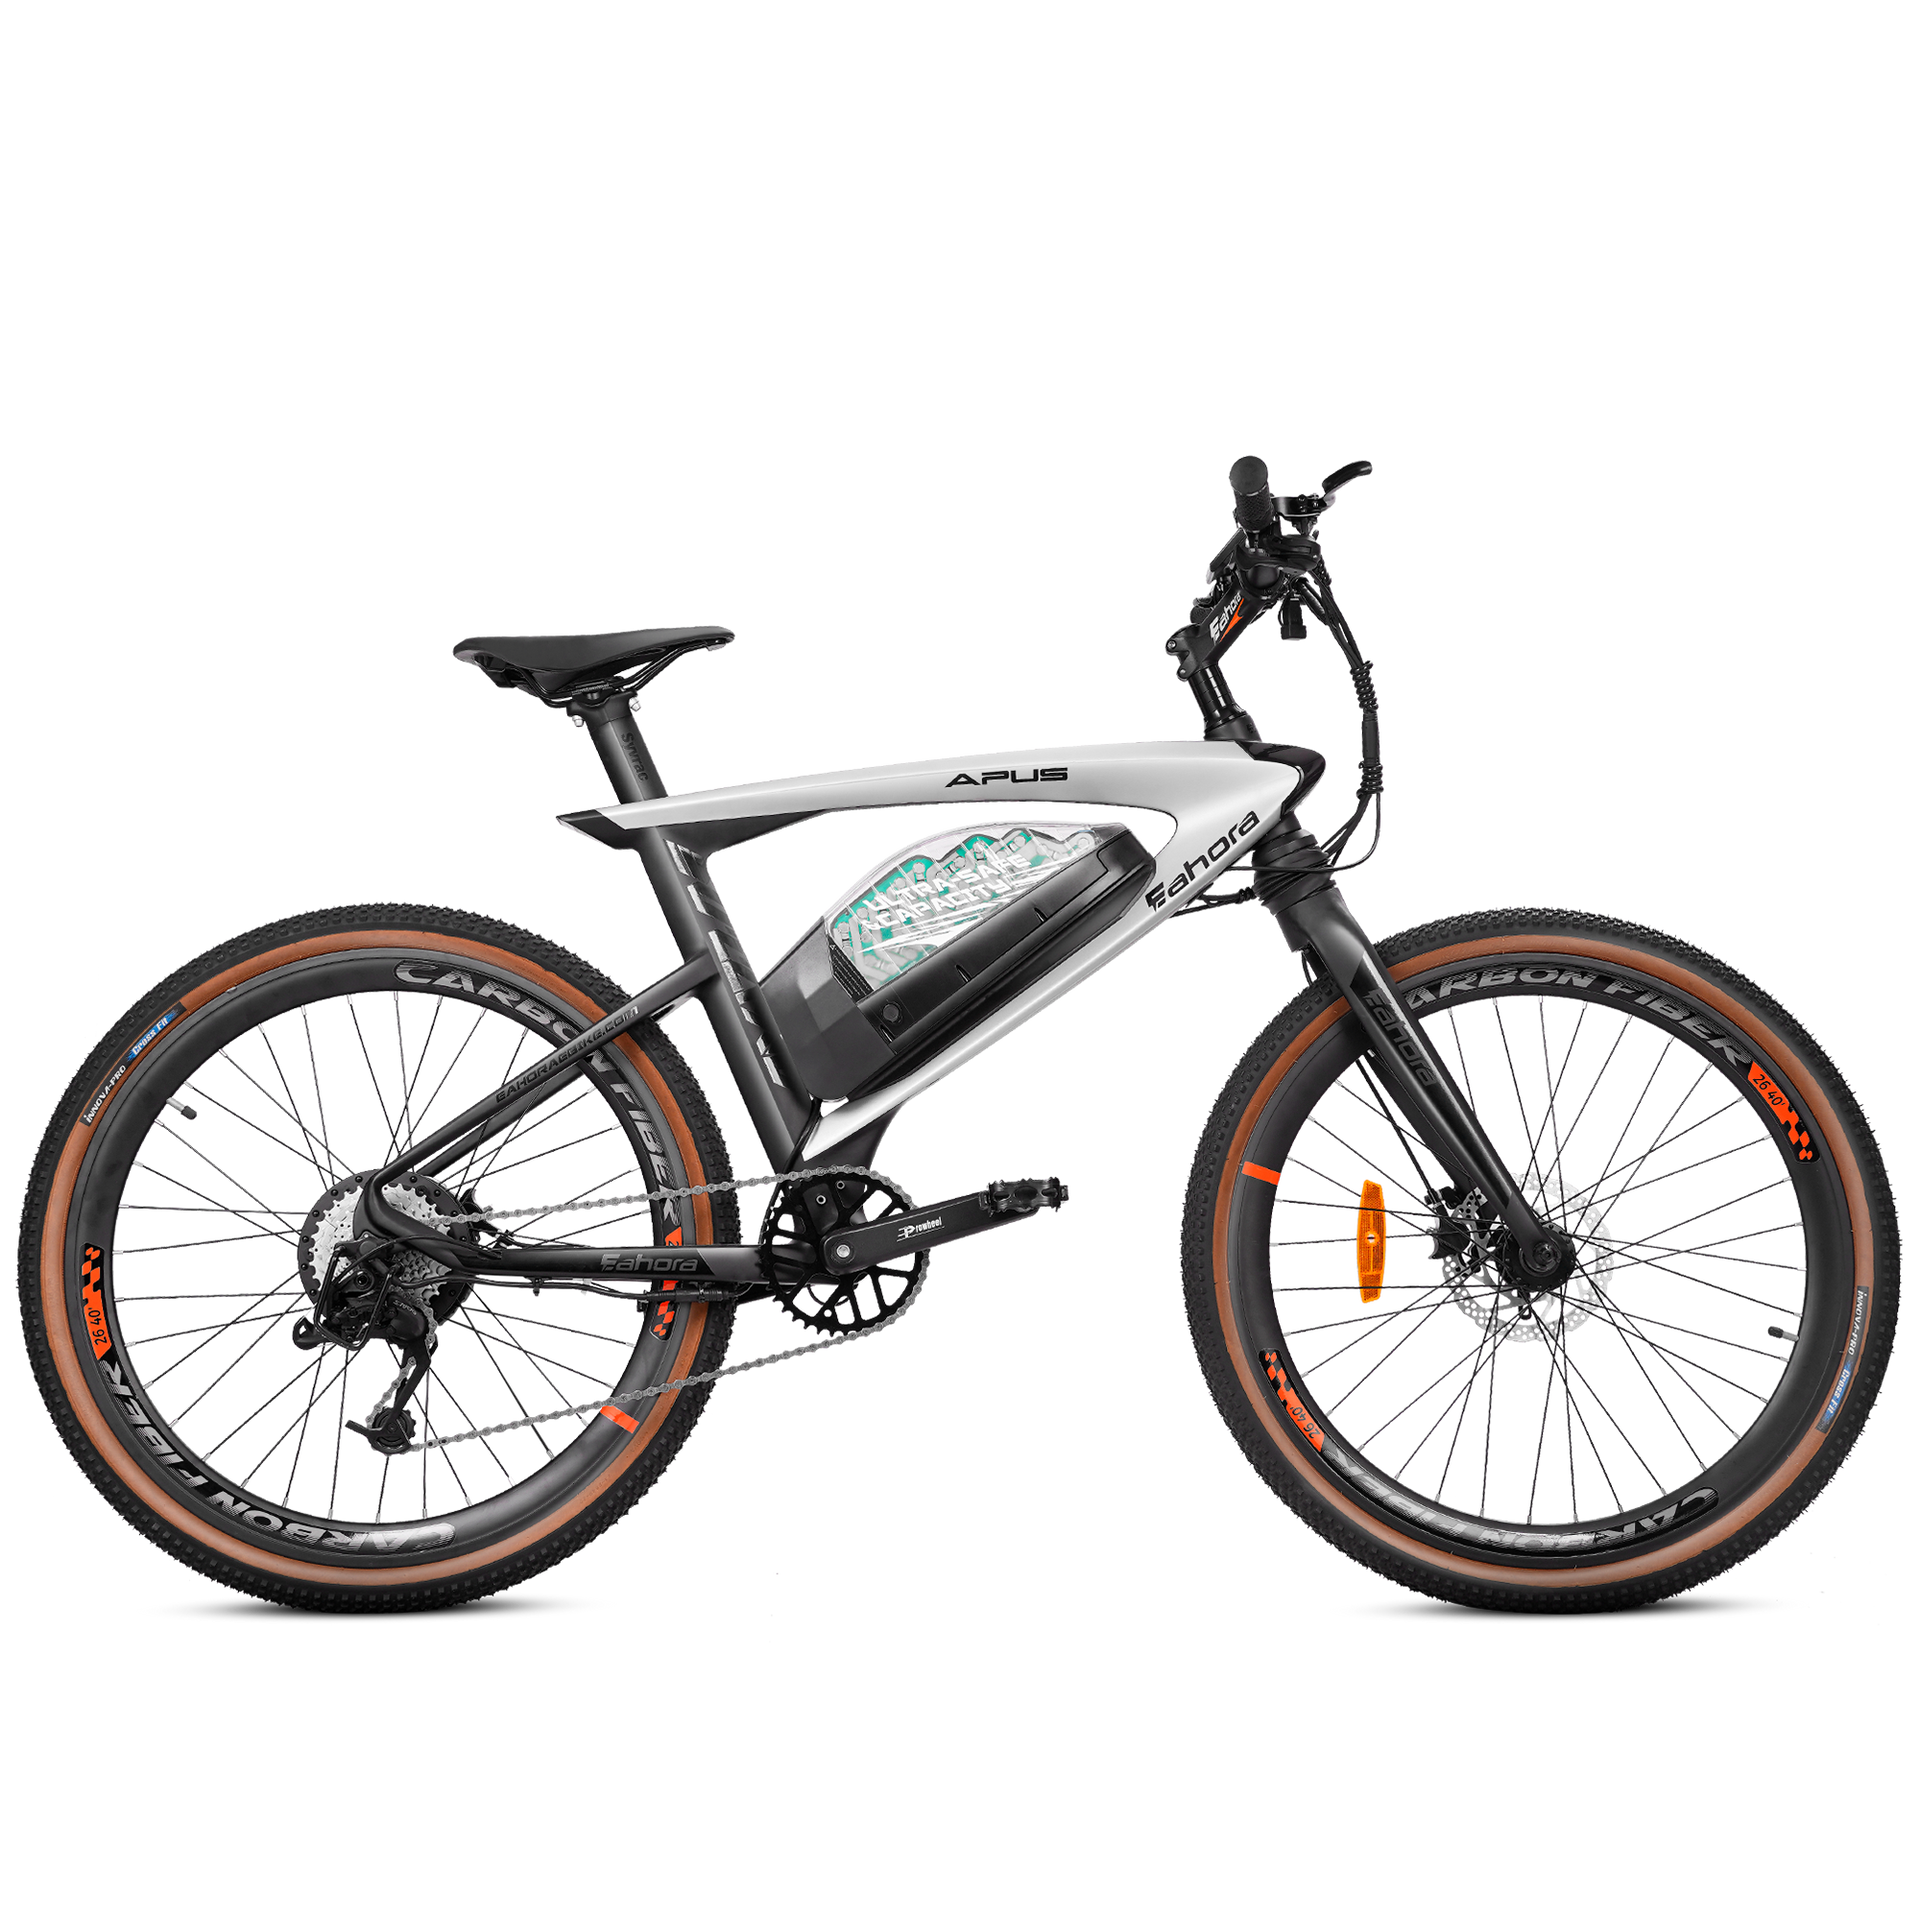 Carbon Fiber Electric Bike | Eahora APUS Electric Bike For Sale